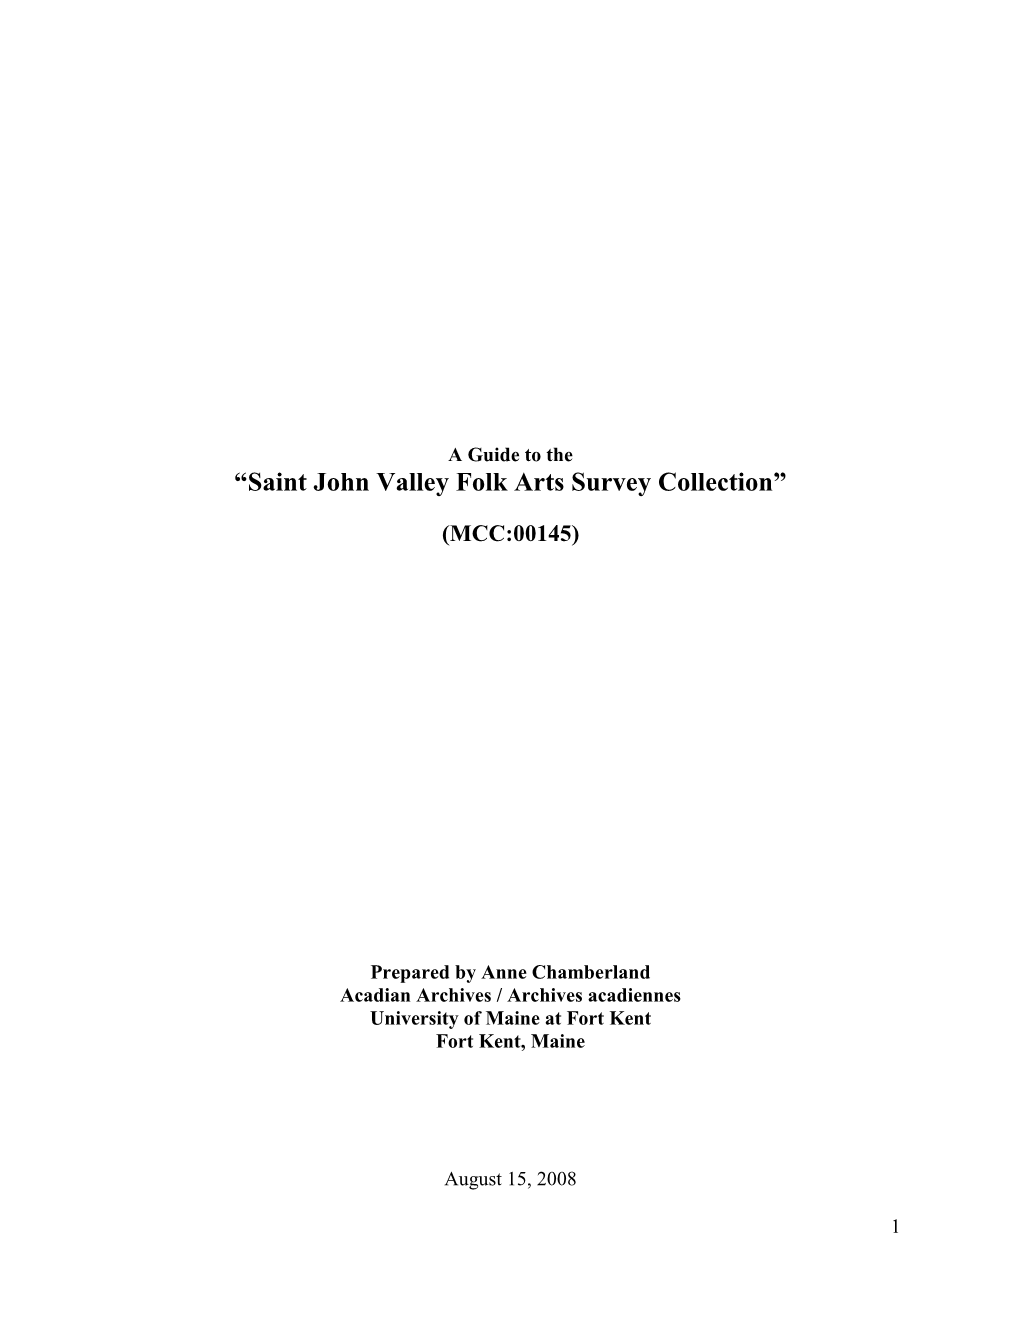 “Saint John Valley Folk Arts Survey Collection”